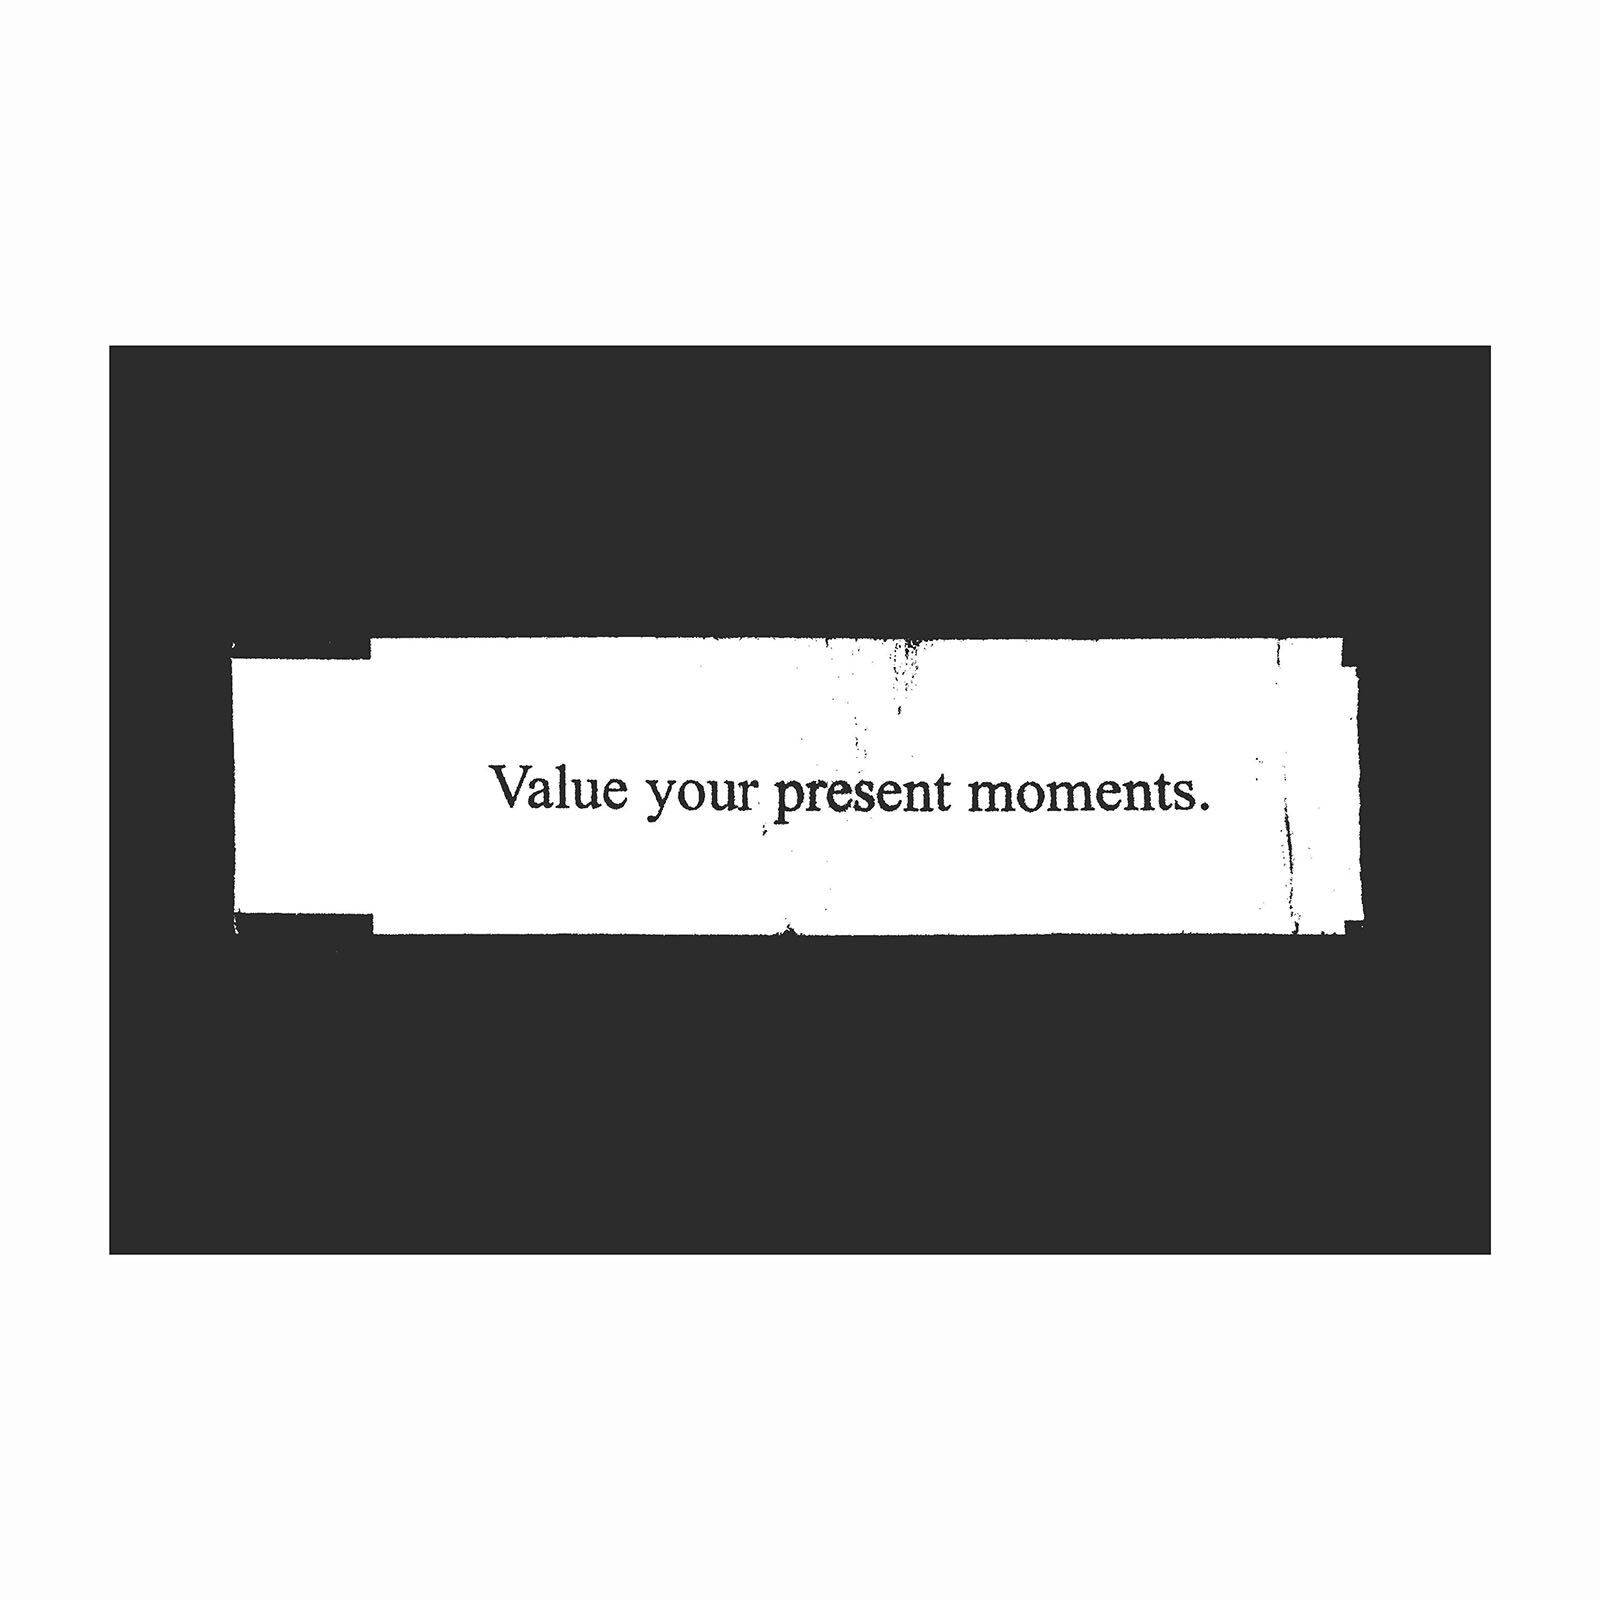 Ape_Bleakney_20YearsofFortunes_Blacktop 12.5x19 (Value your present moments).jpg